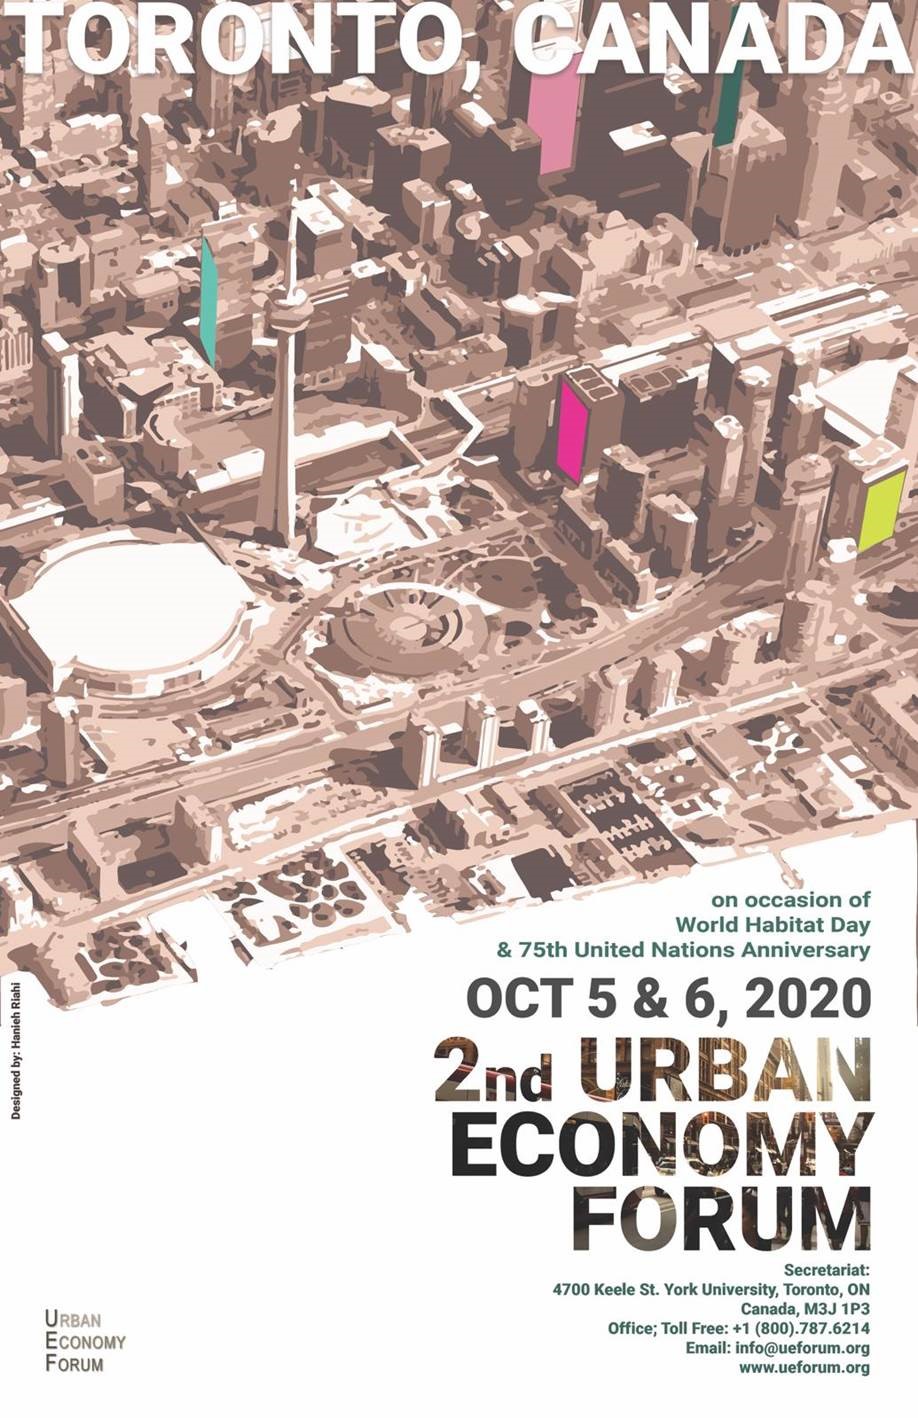 Toronto to host Urban Economy Forum 2020 on Occasion of World Habitat Day